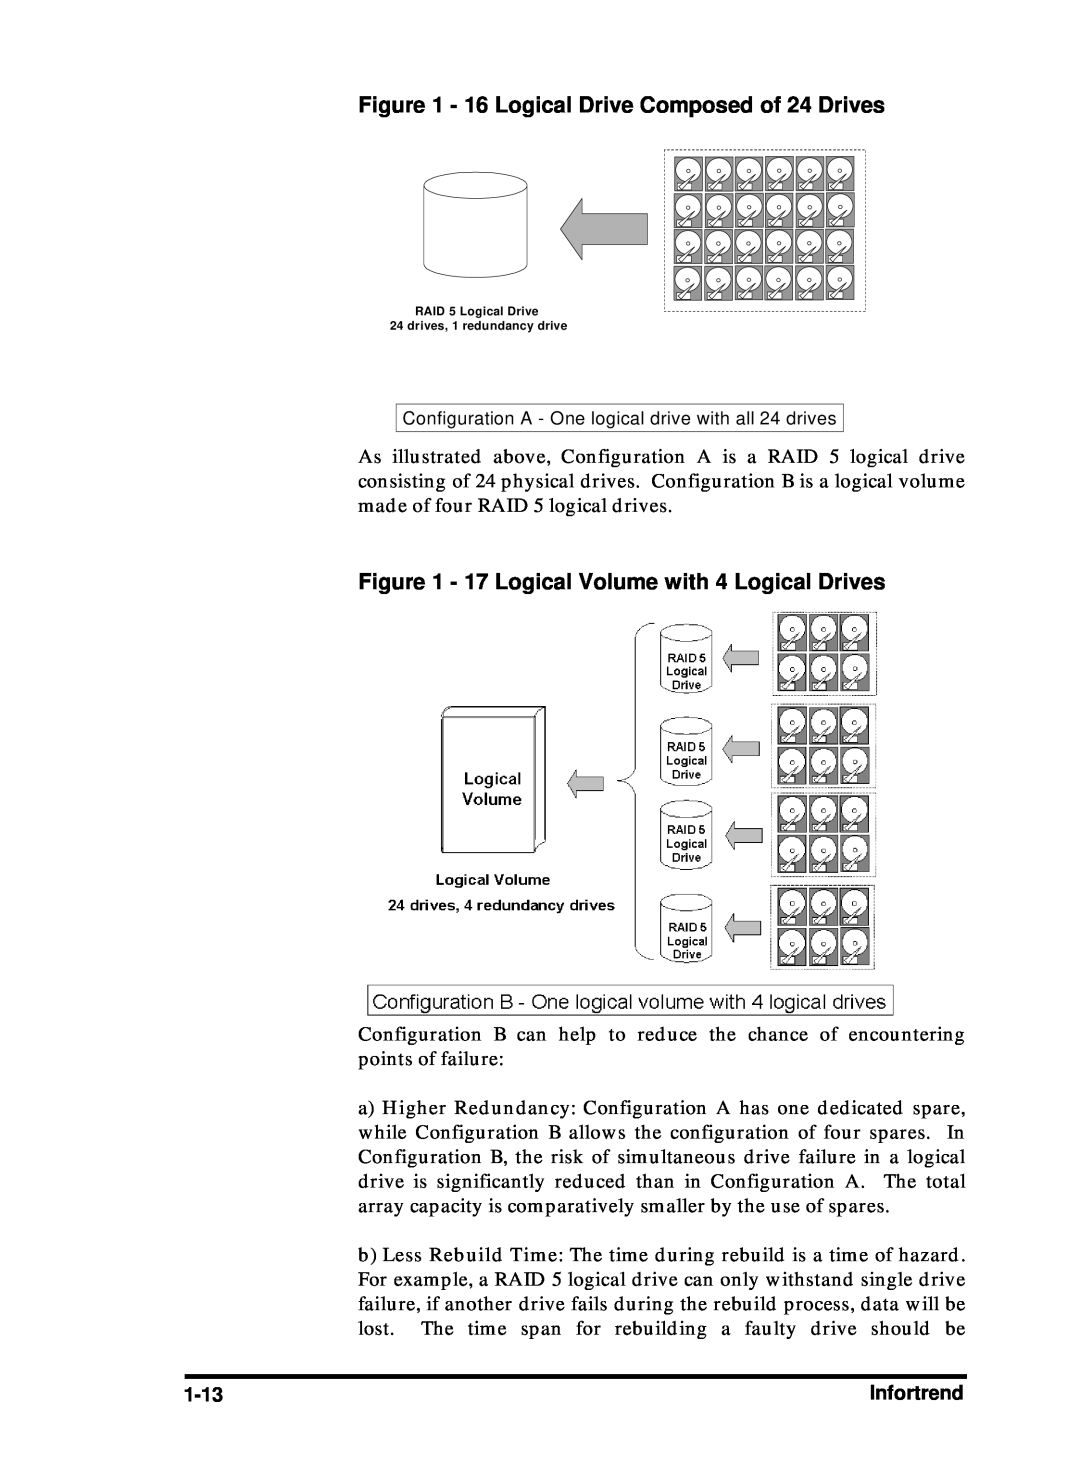 Compaq Infortrend manual 16 Logical Drive Composed of 24 Drives, 17 Logical Volume with 4 Logical Drives 